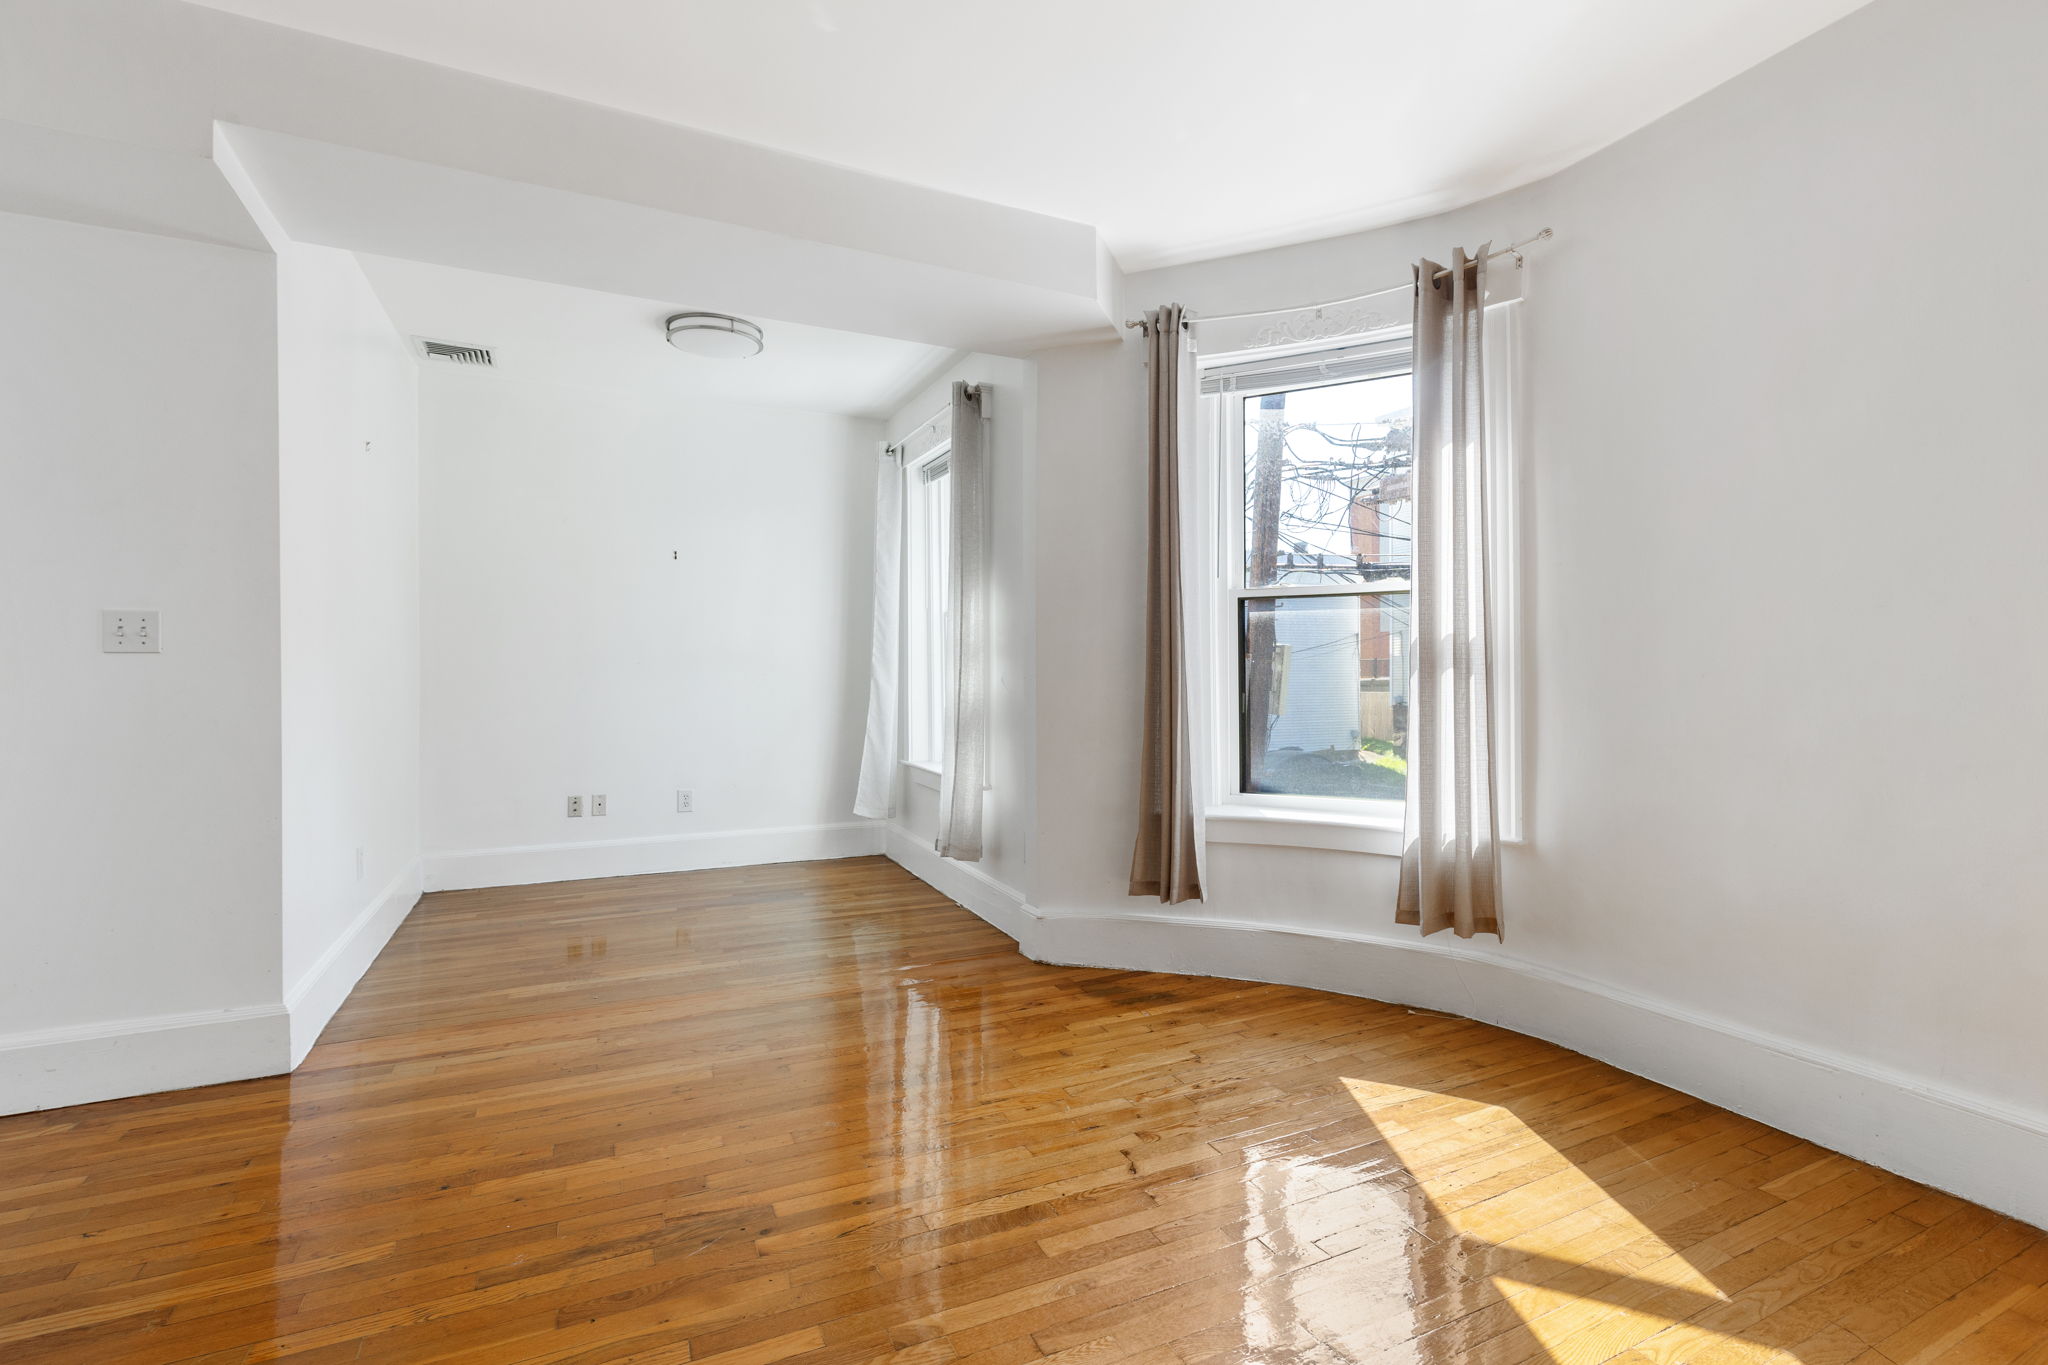 Photos of apartment on Cameron St.,Brookline MA 02445